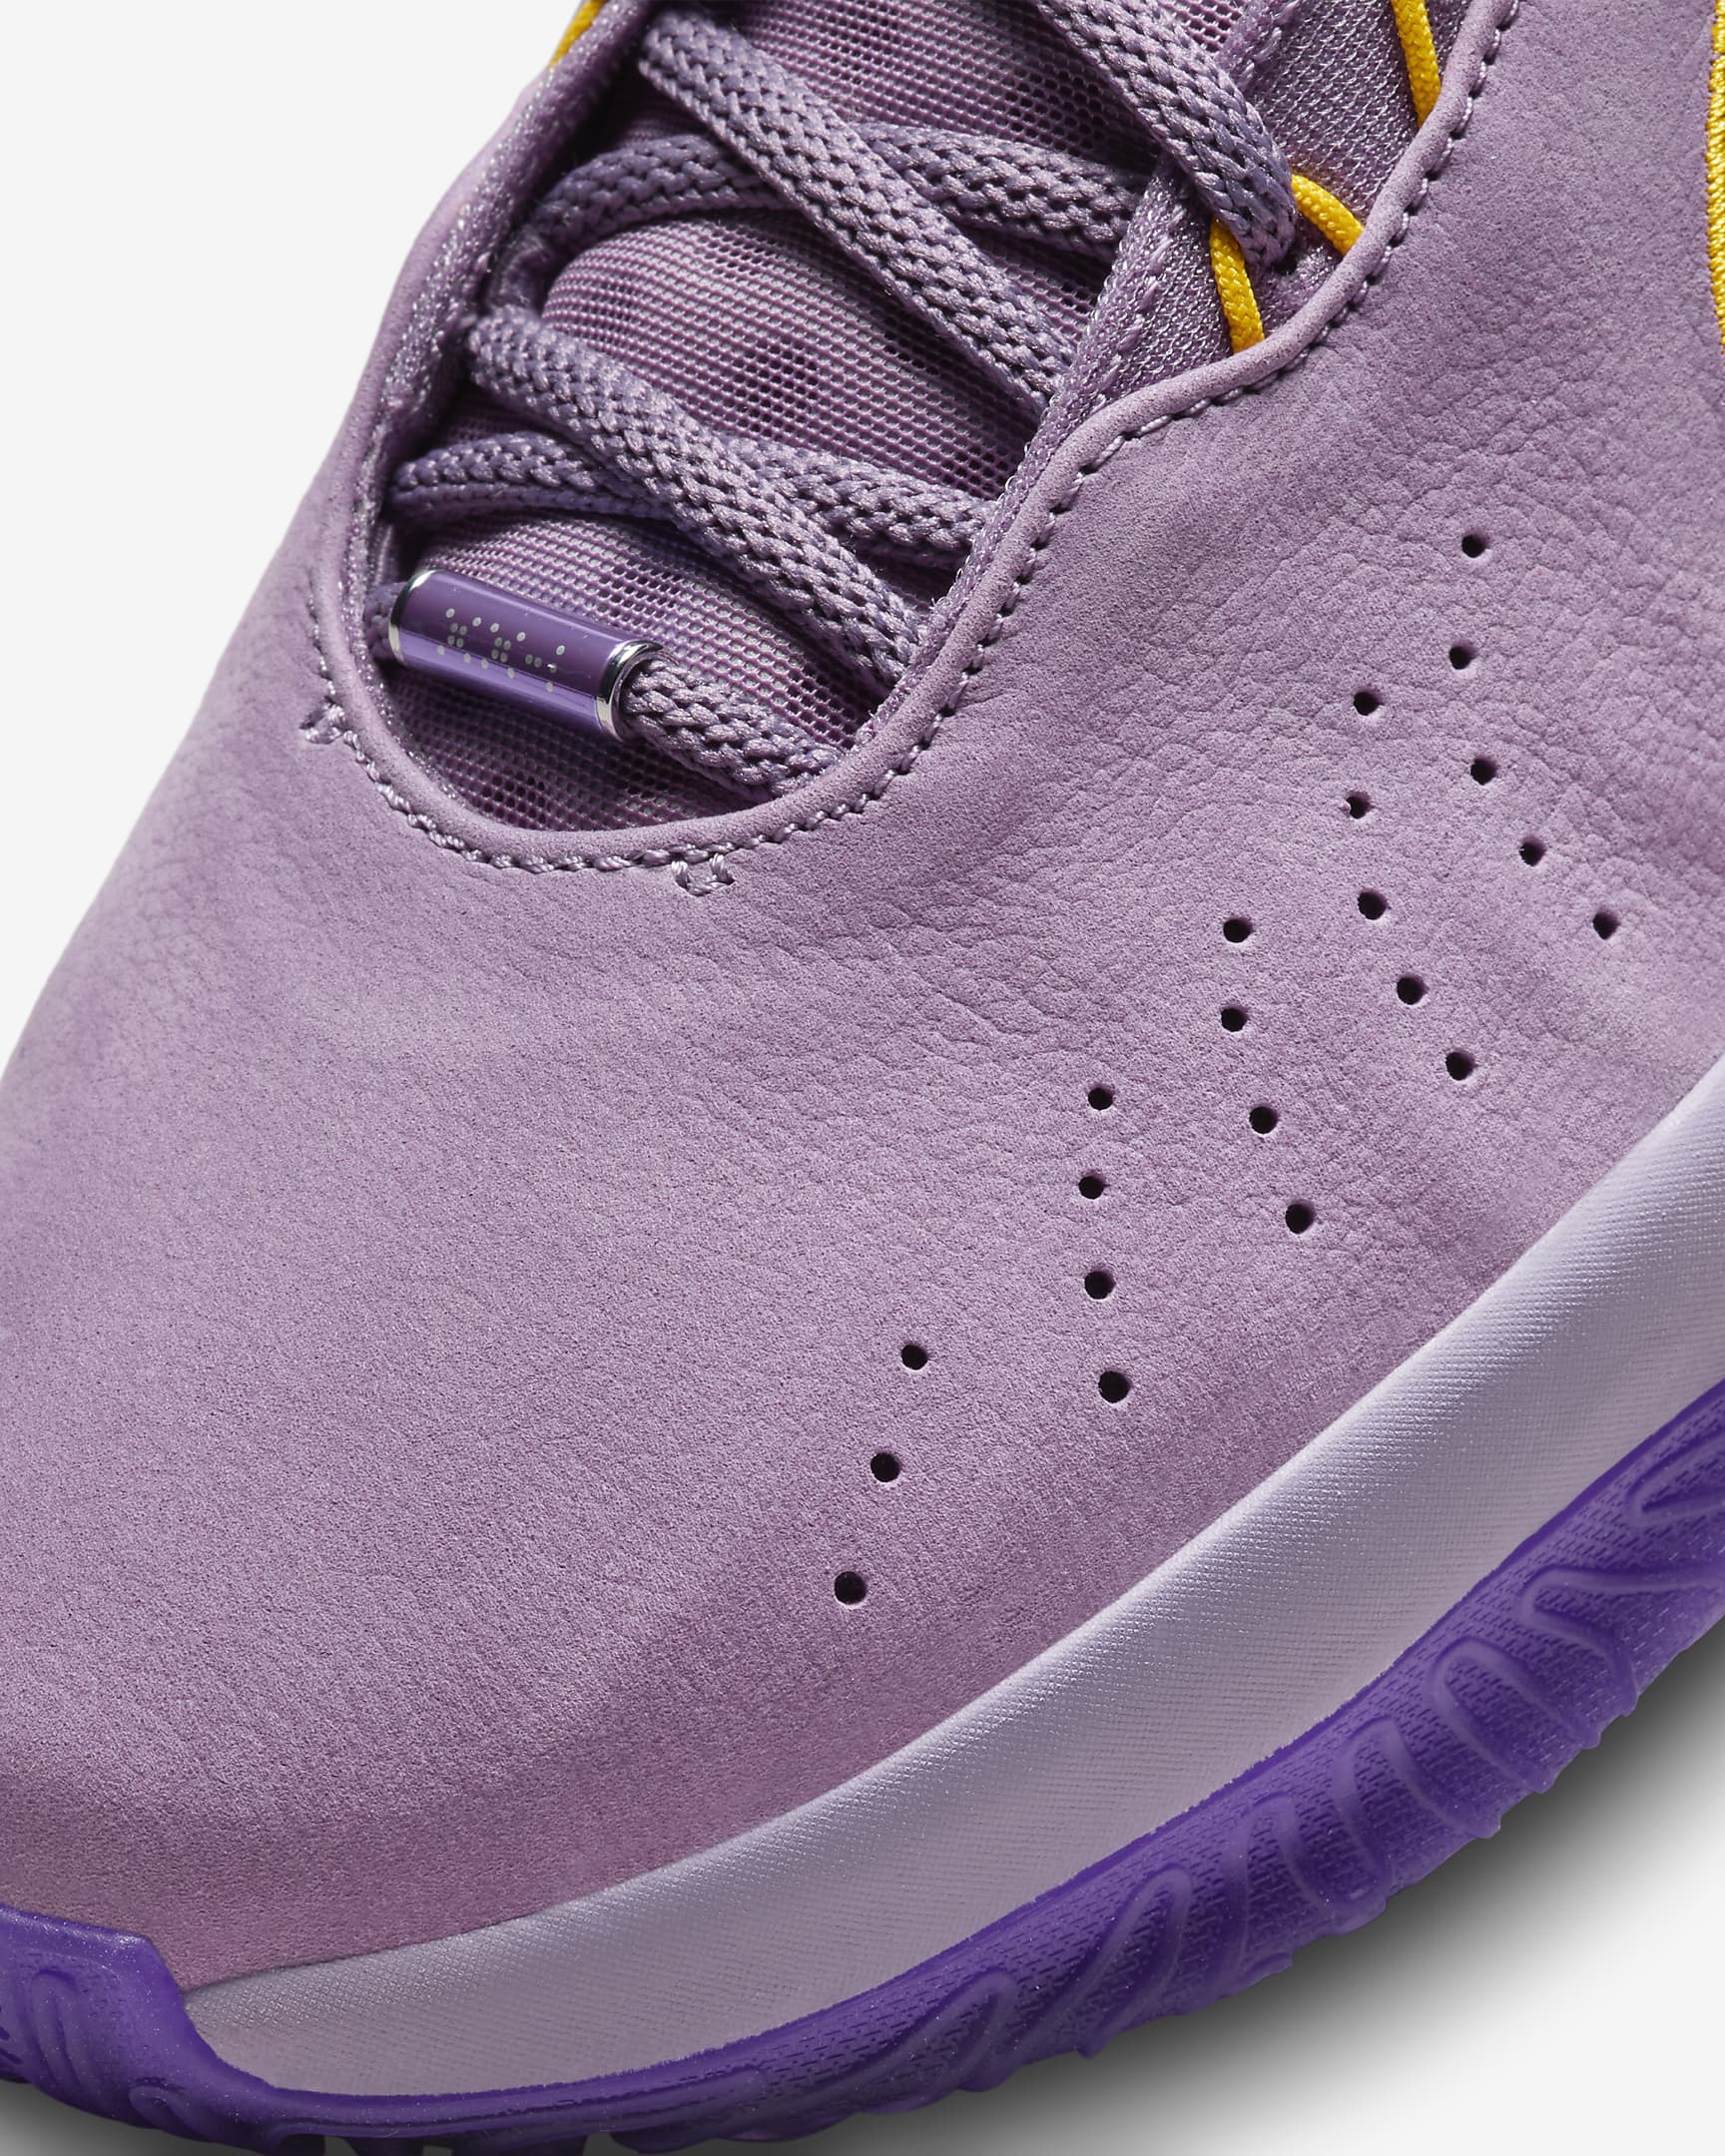 LeBron XXI 'Freshwater' Basketball Shoes - Violet Dust/Purple Cosmos/University Gold